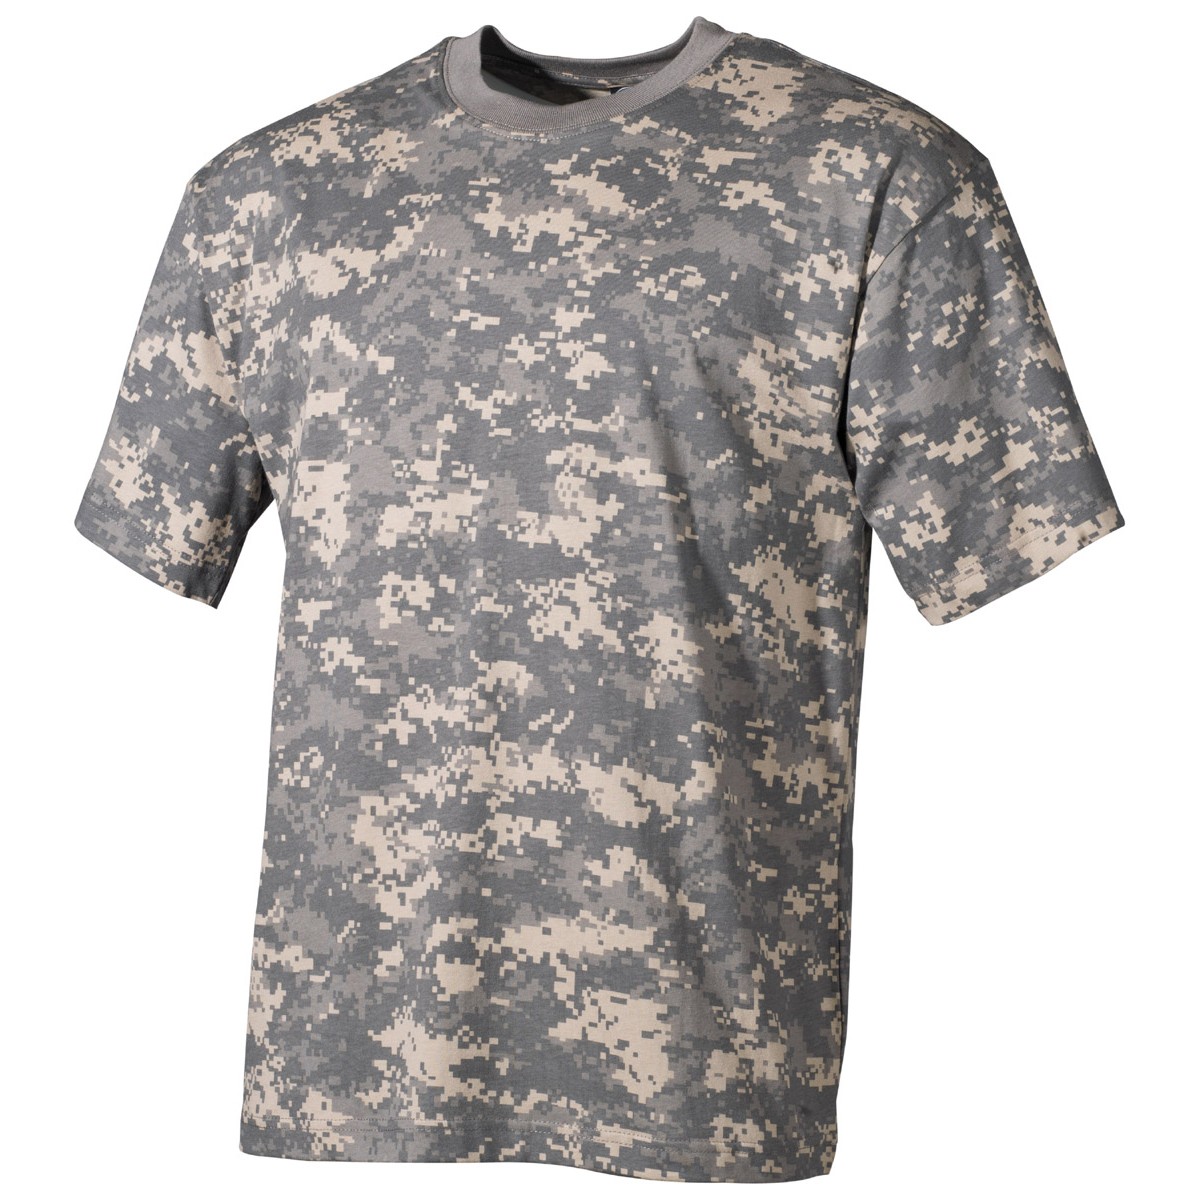 US Army Digital Camo T-Shirt - Short Sleeve